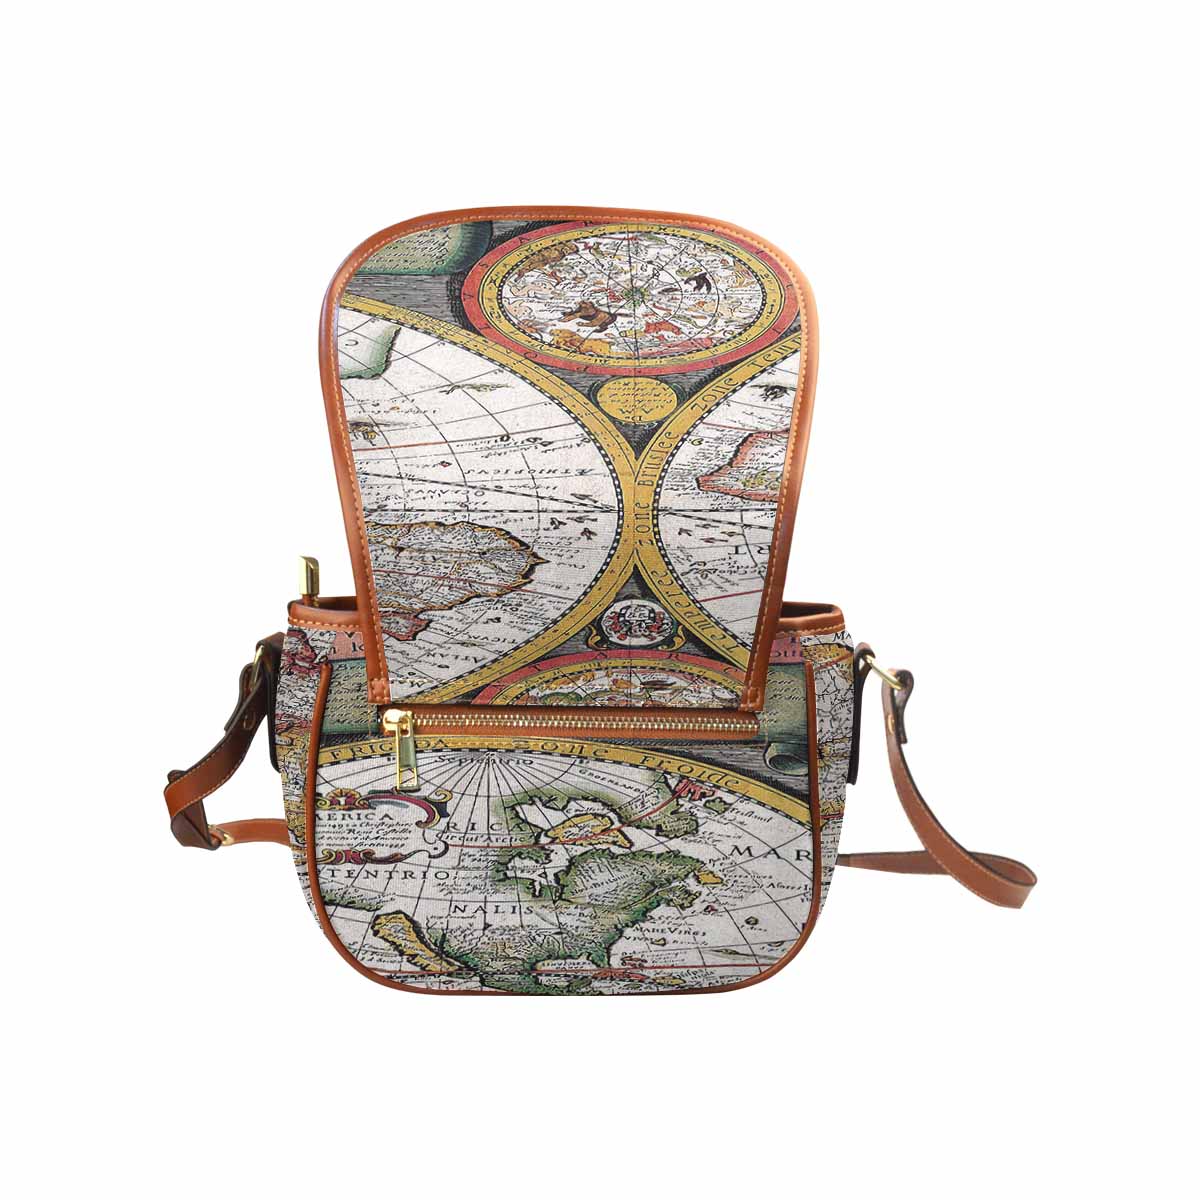 Antique Map design Handbag, saddle bag, Design 31